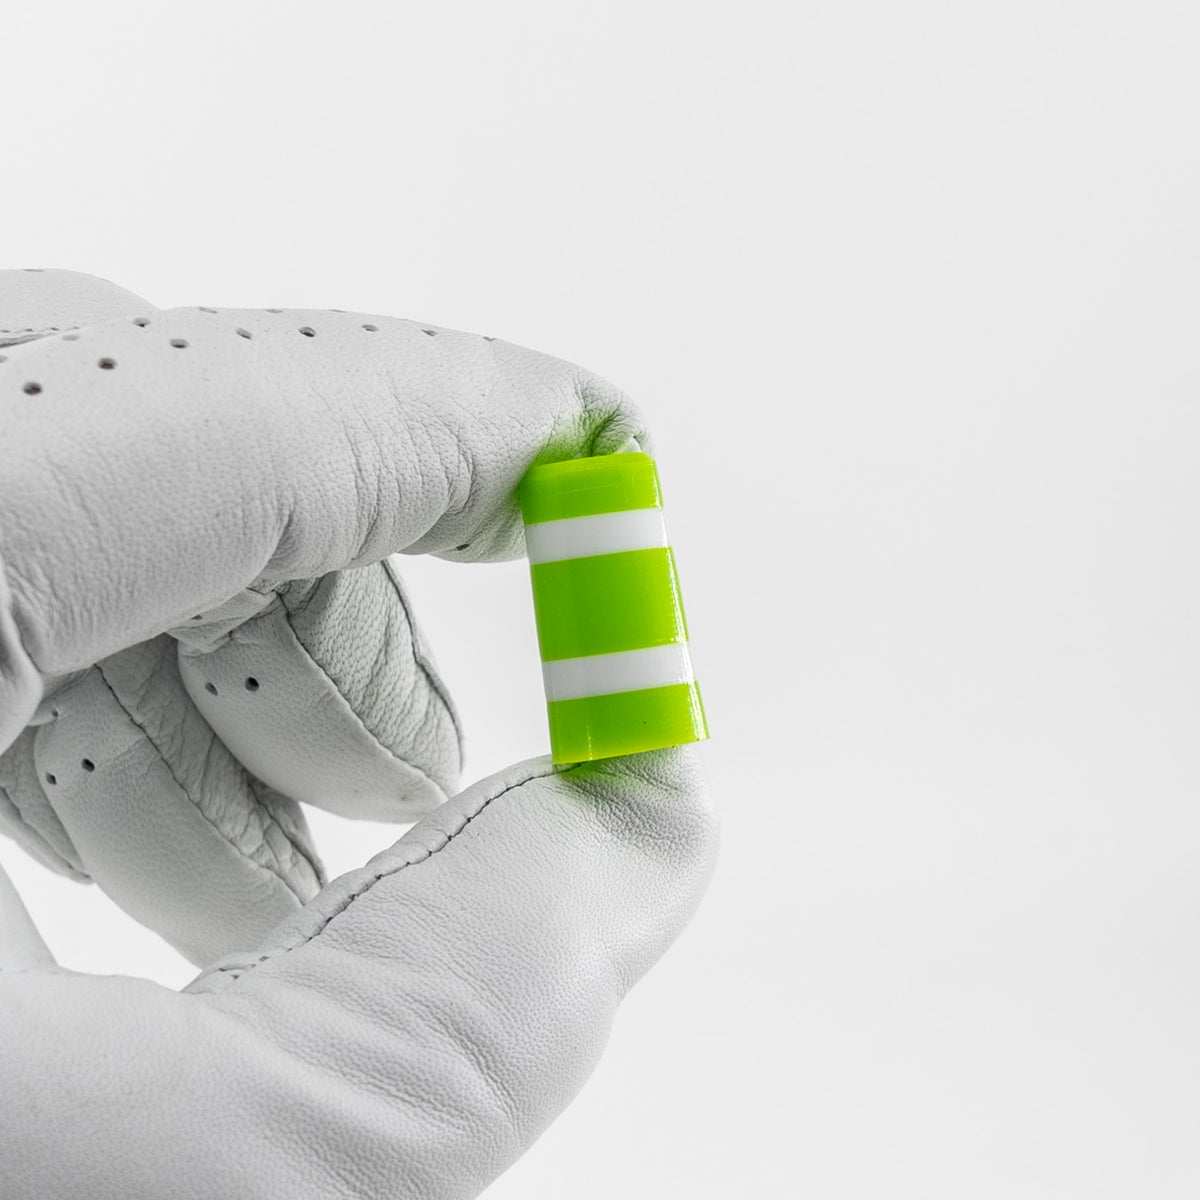 key lime pie green and white golf club ferrules single golf glove